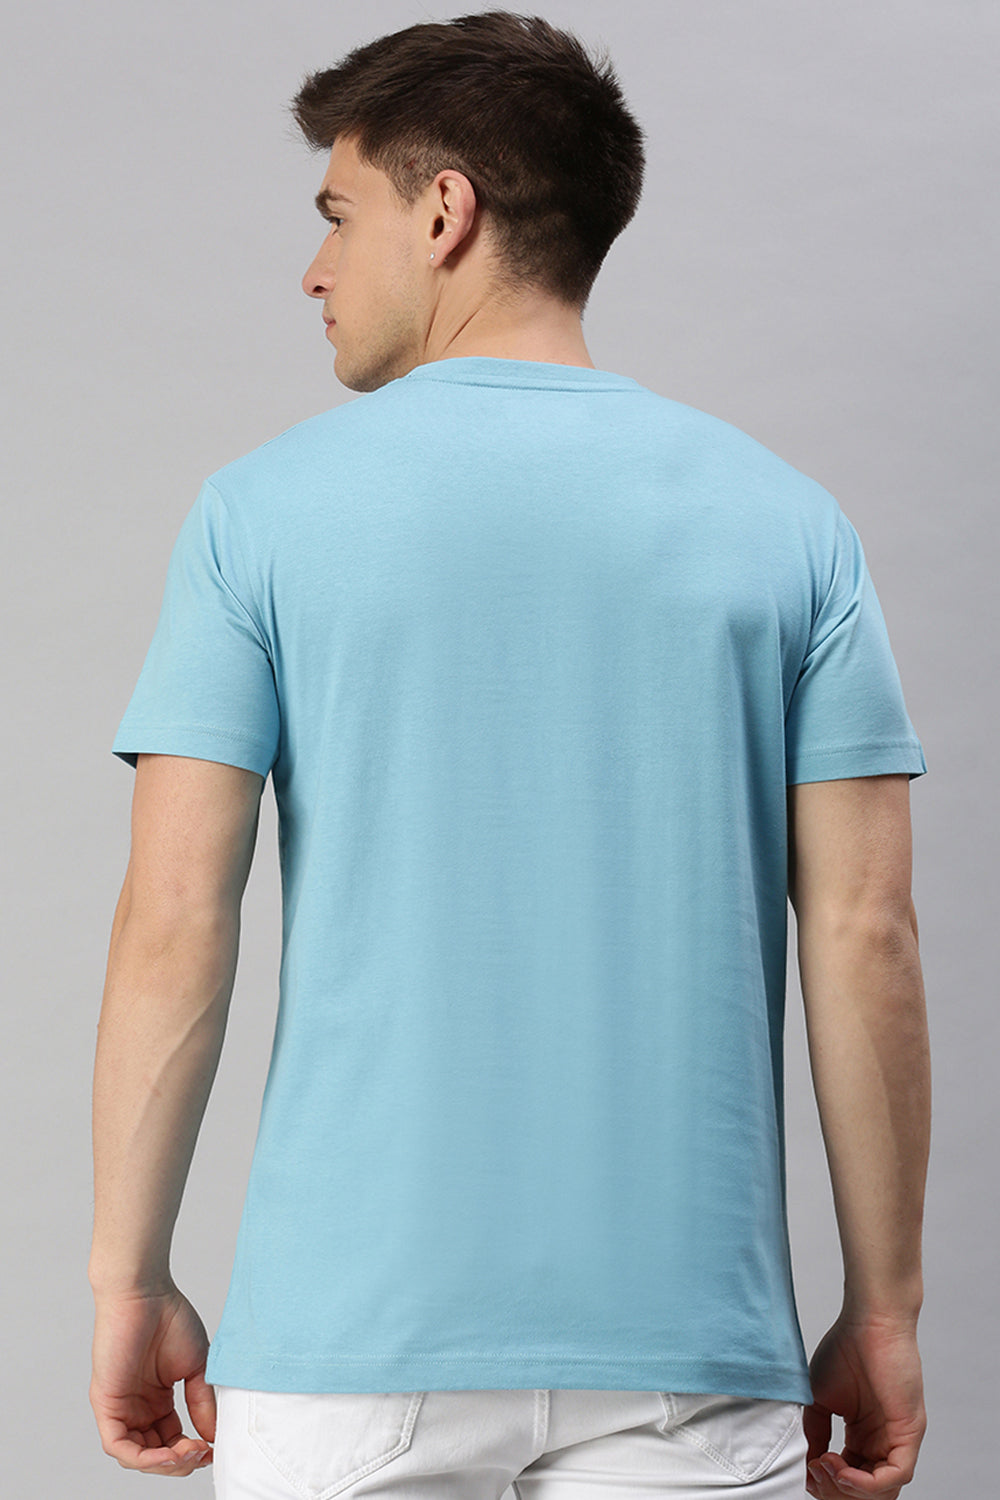 Classic Polo Men's Cotton Half Sleeve Printed Slim Fit Crew Neck Light Blue Color T-Shirt | Baleno - 501 A